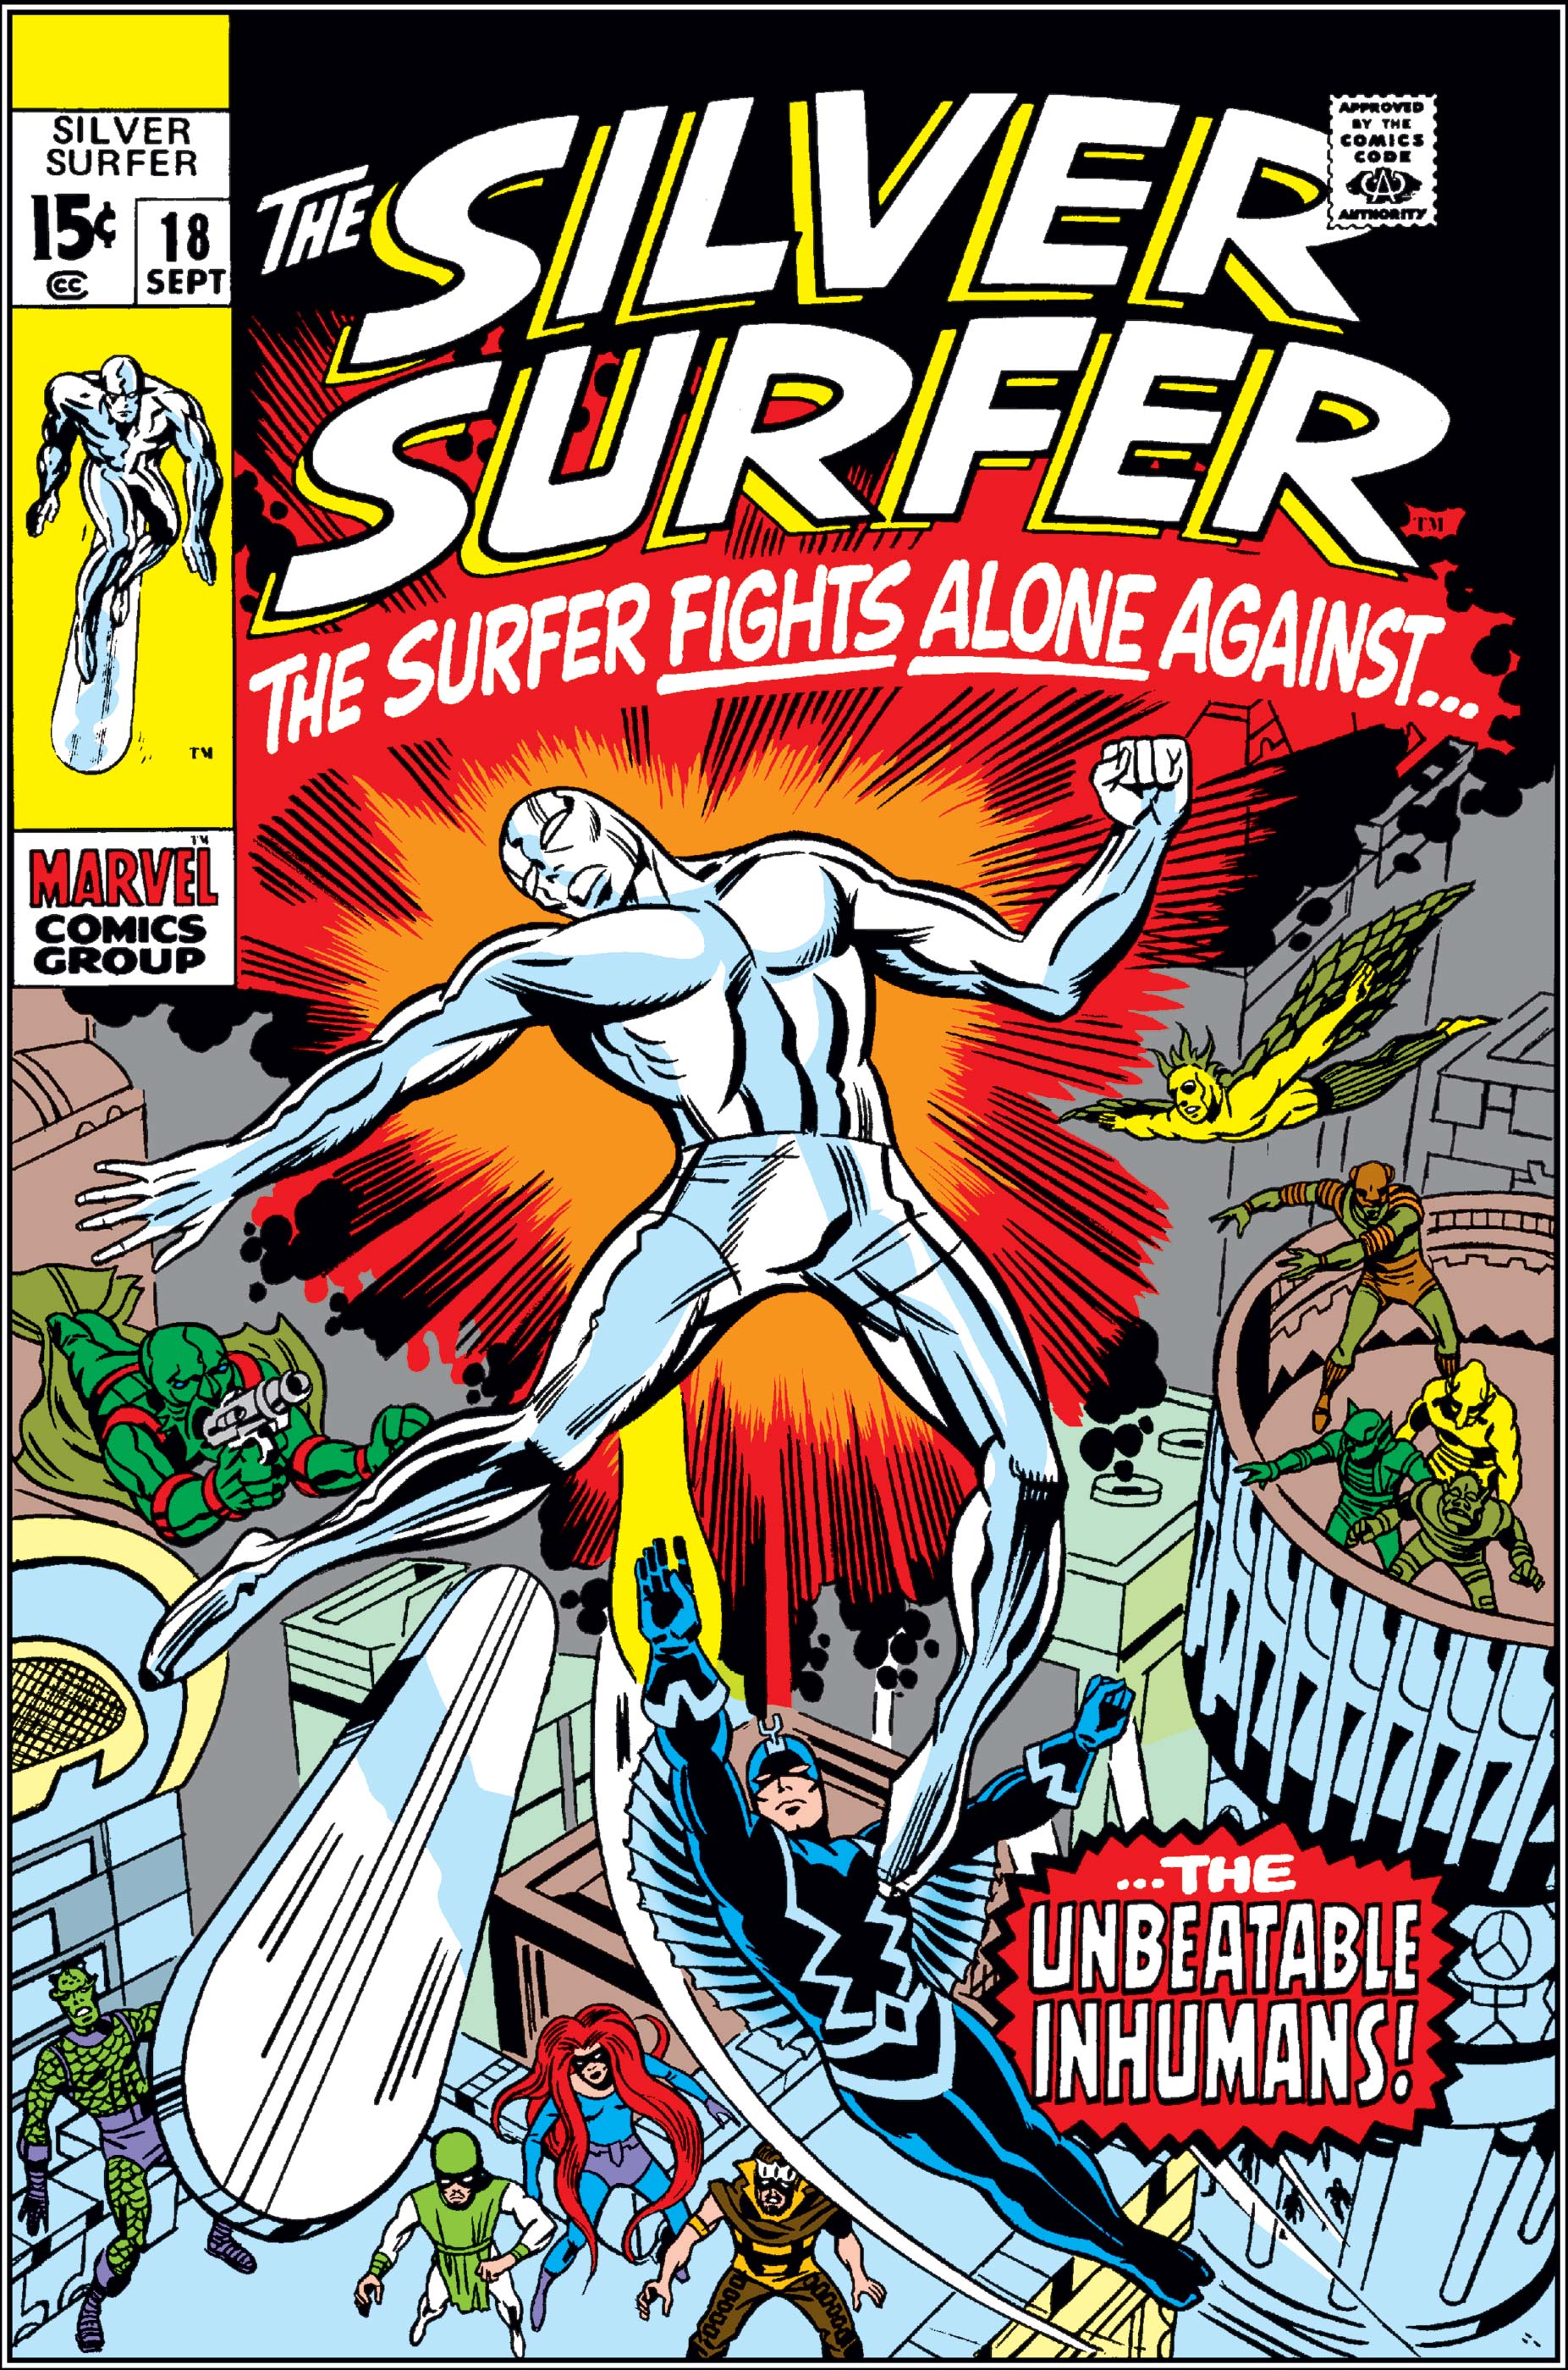 Silver Surfer (1968) #18